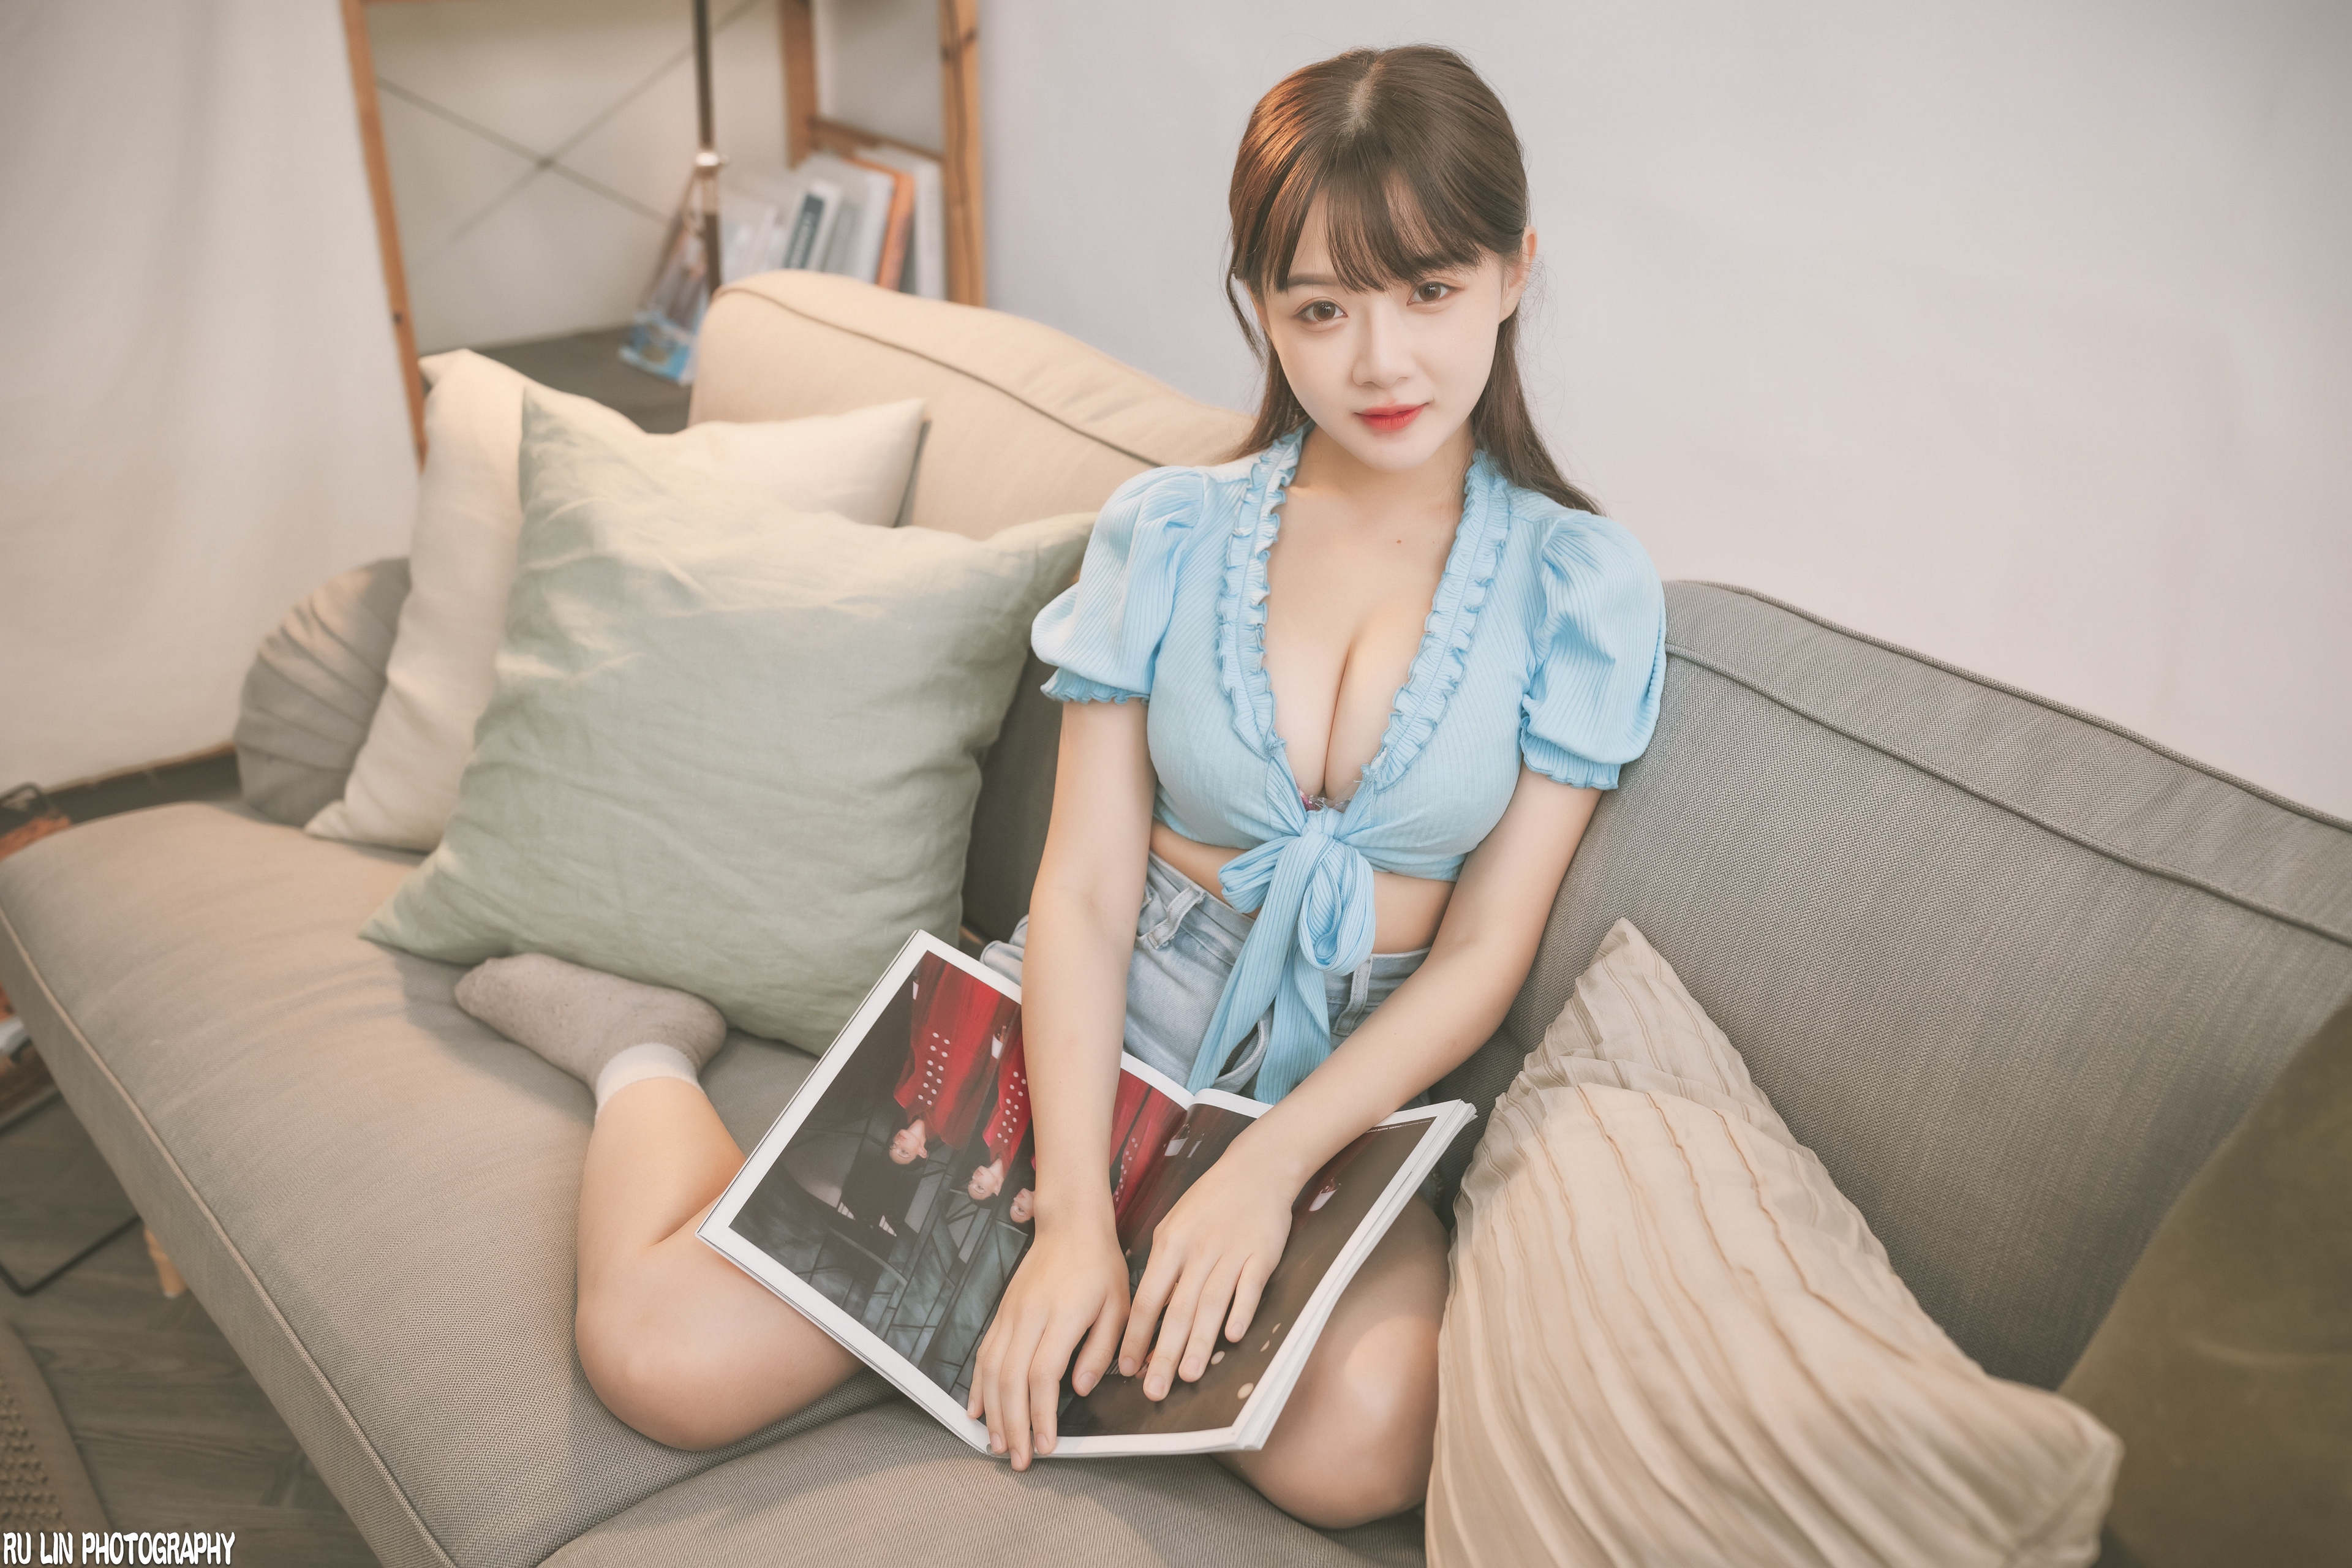 Winnie Qian Women Model Brunette Bangs Asian Looking At Viewer Blue Tops Socks Couch Indoors Women I 3840x2560